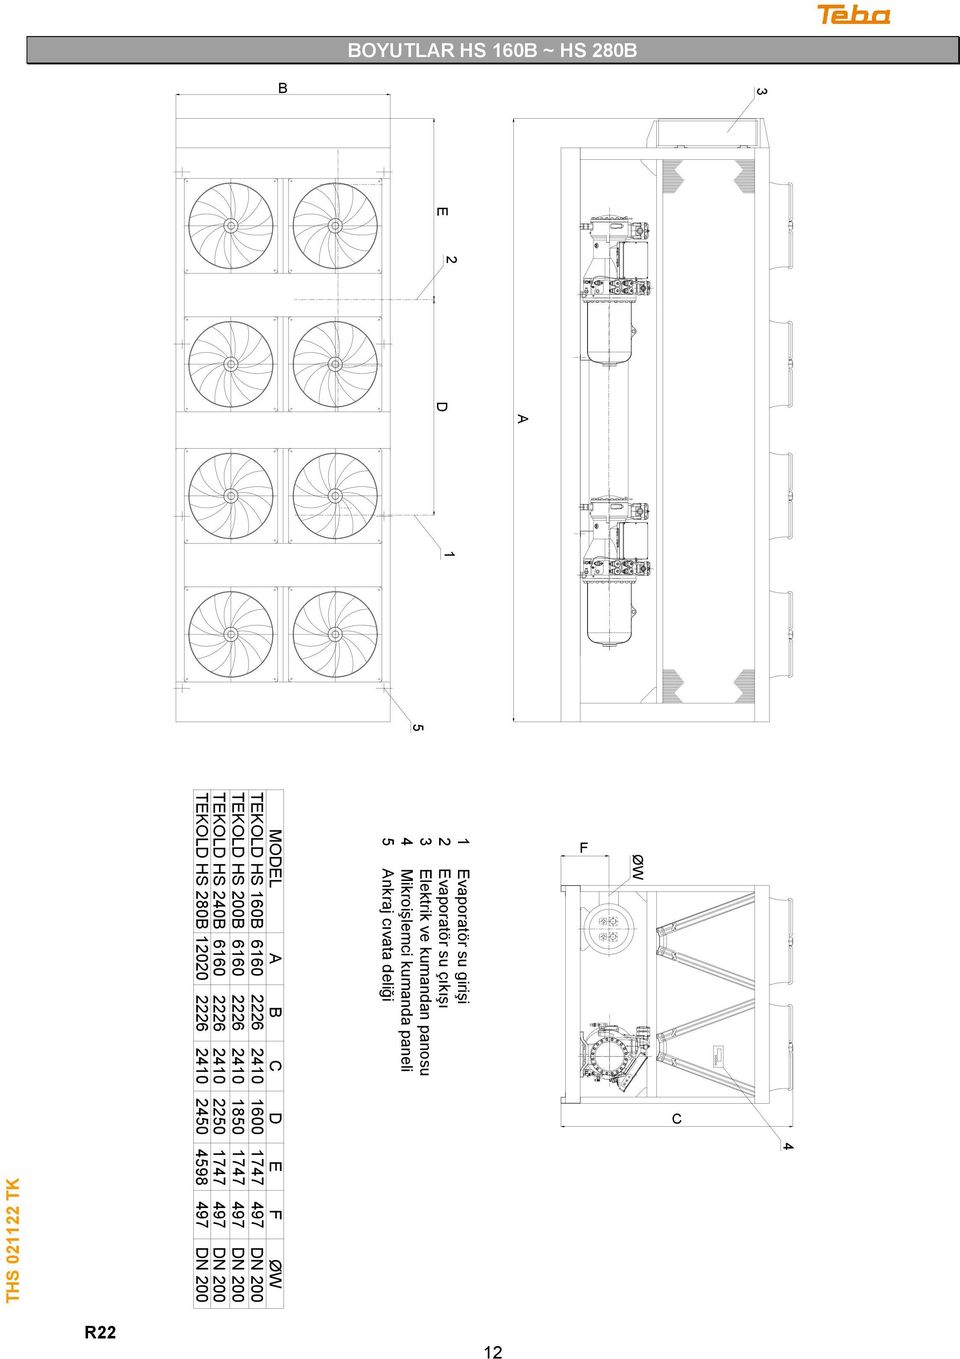 kumandan panosu 4 Mikroişlemci kumanda paneli 5 Ankraj cıvata deliği F ØW D 1600 1850